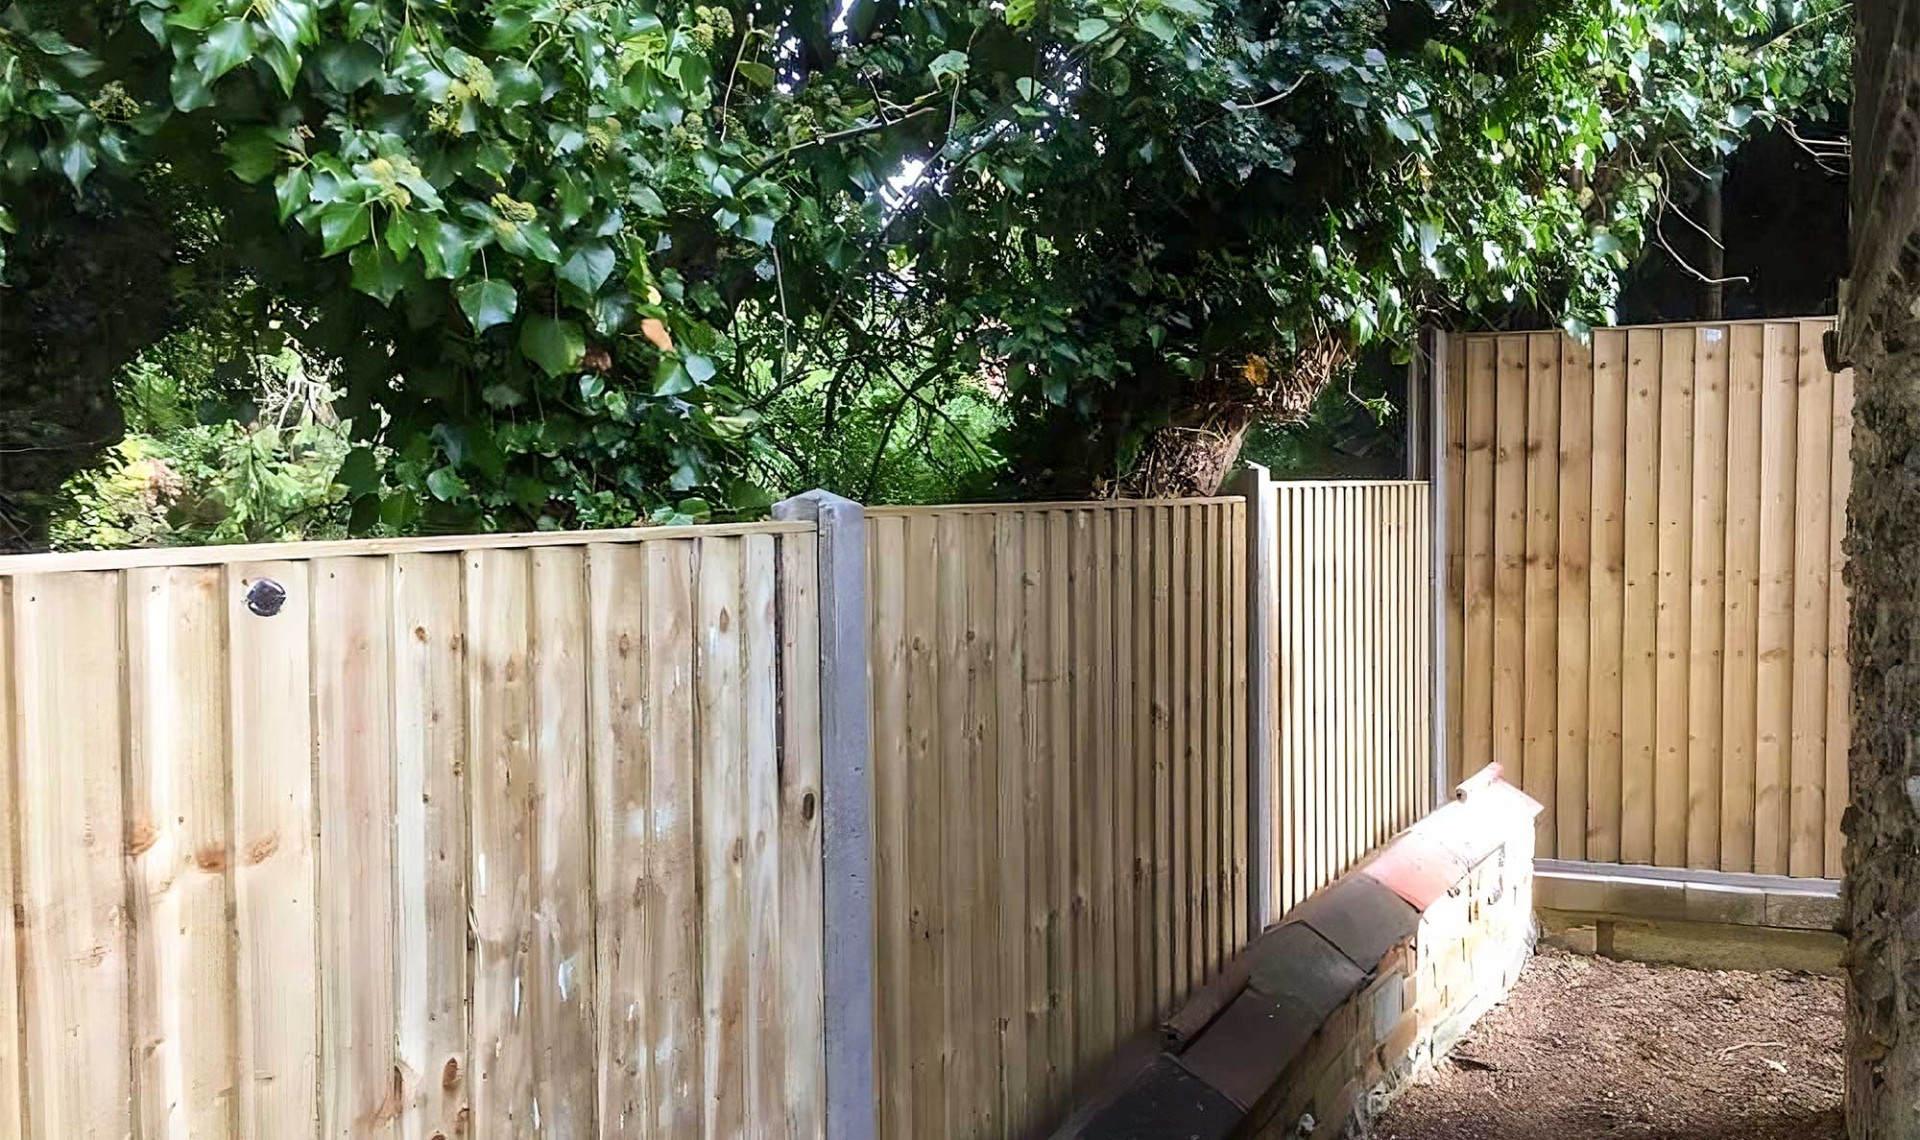 Panel fencing running through garden and along bottom.